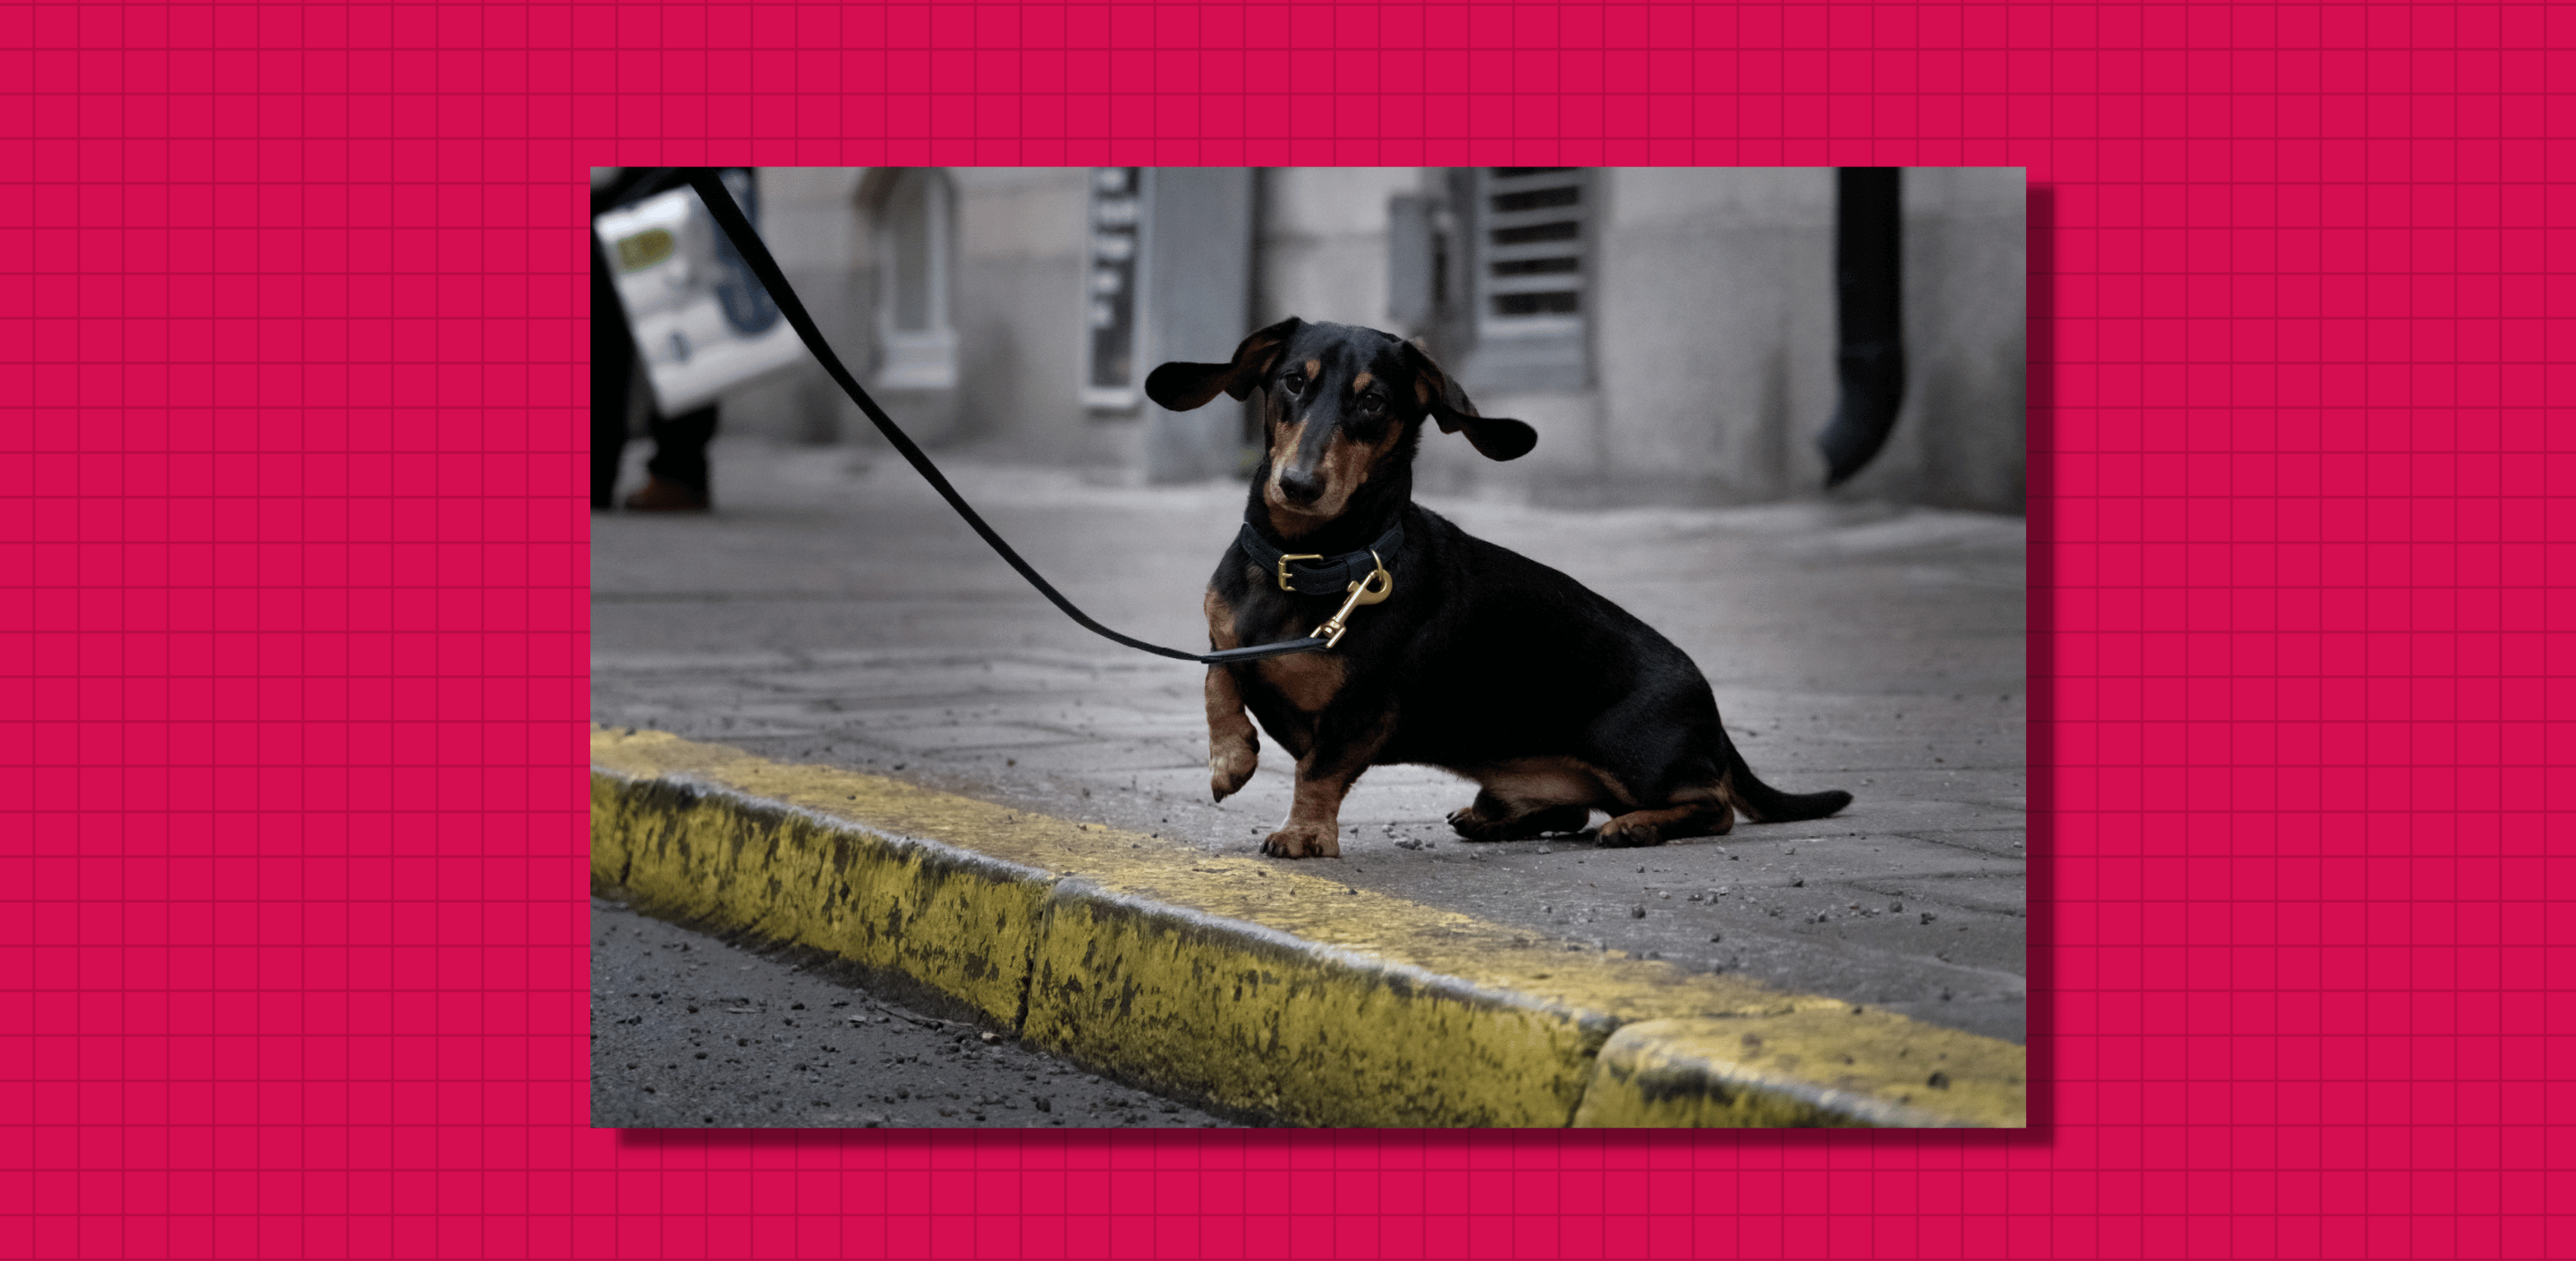 Meet the dog: Heinz - the dachshund